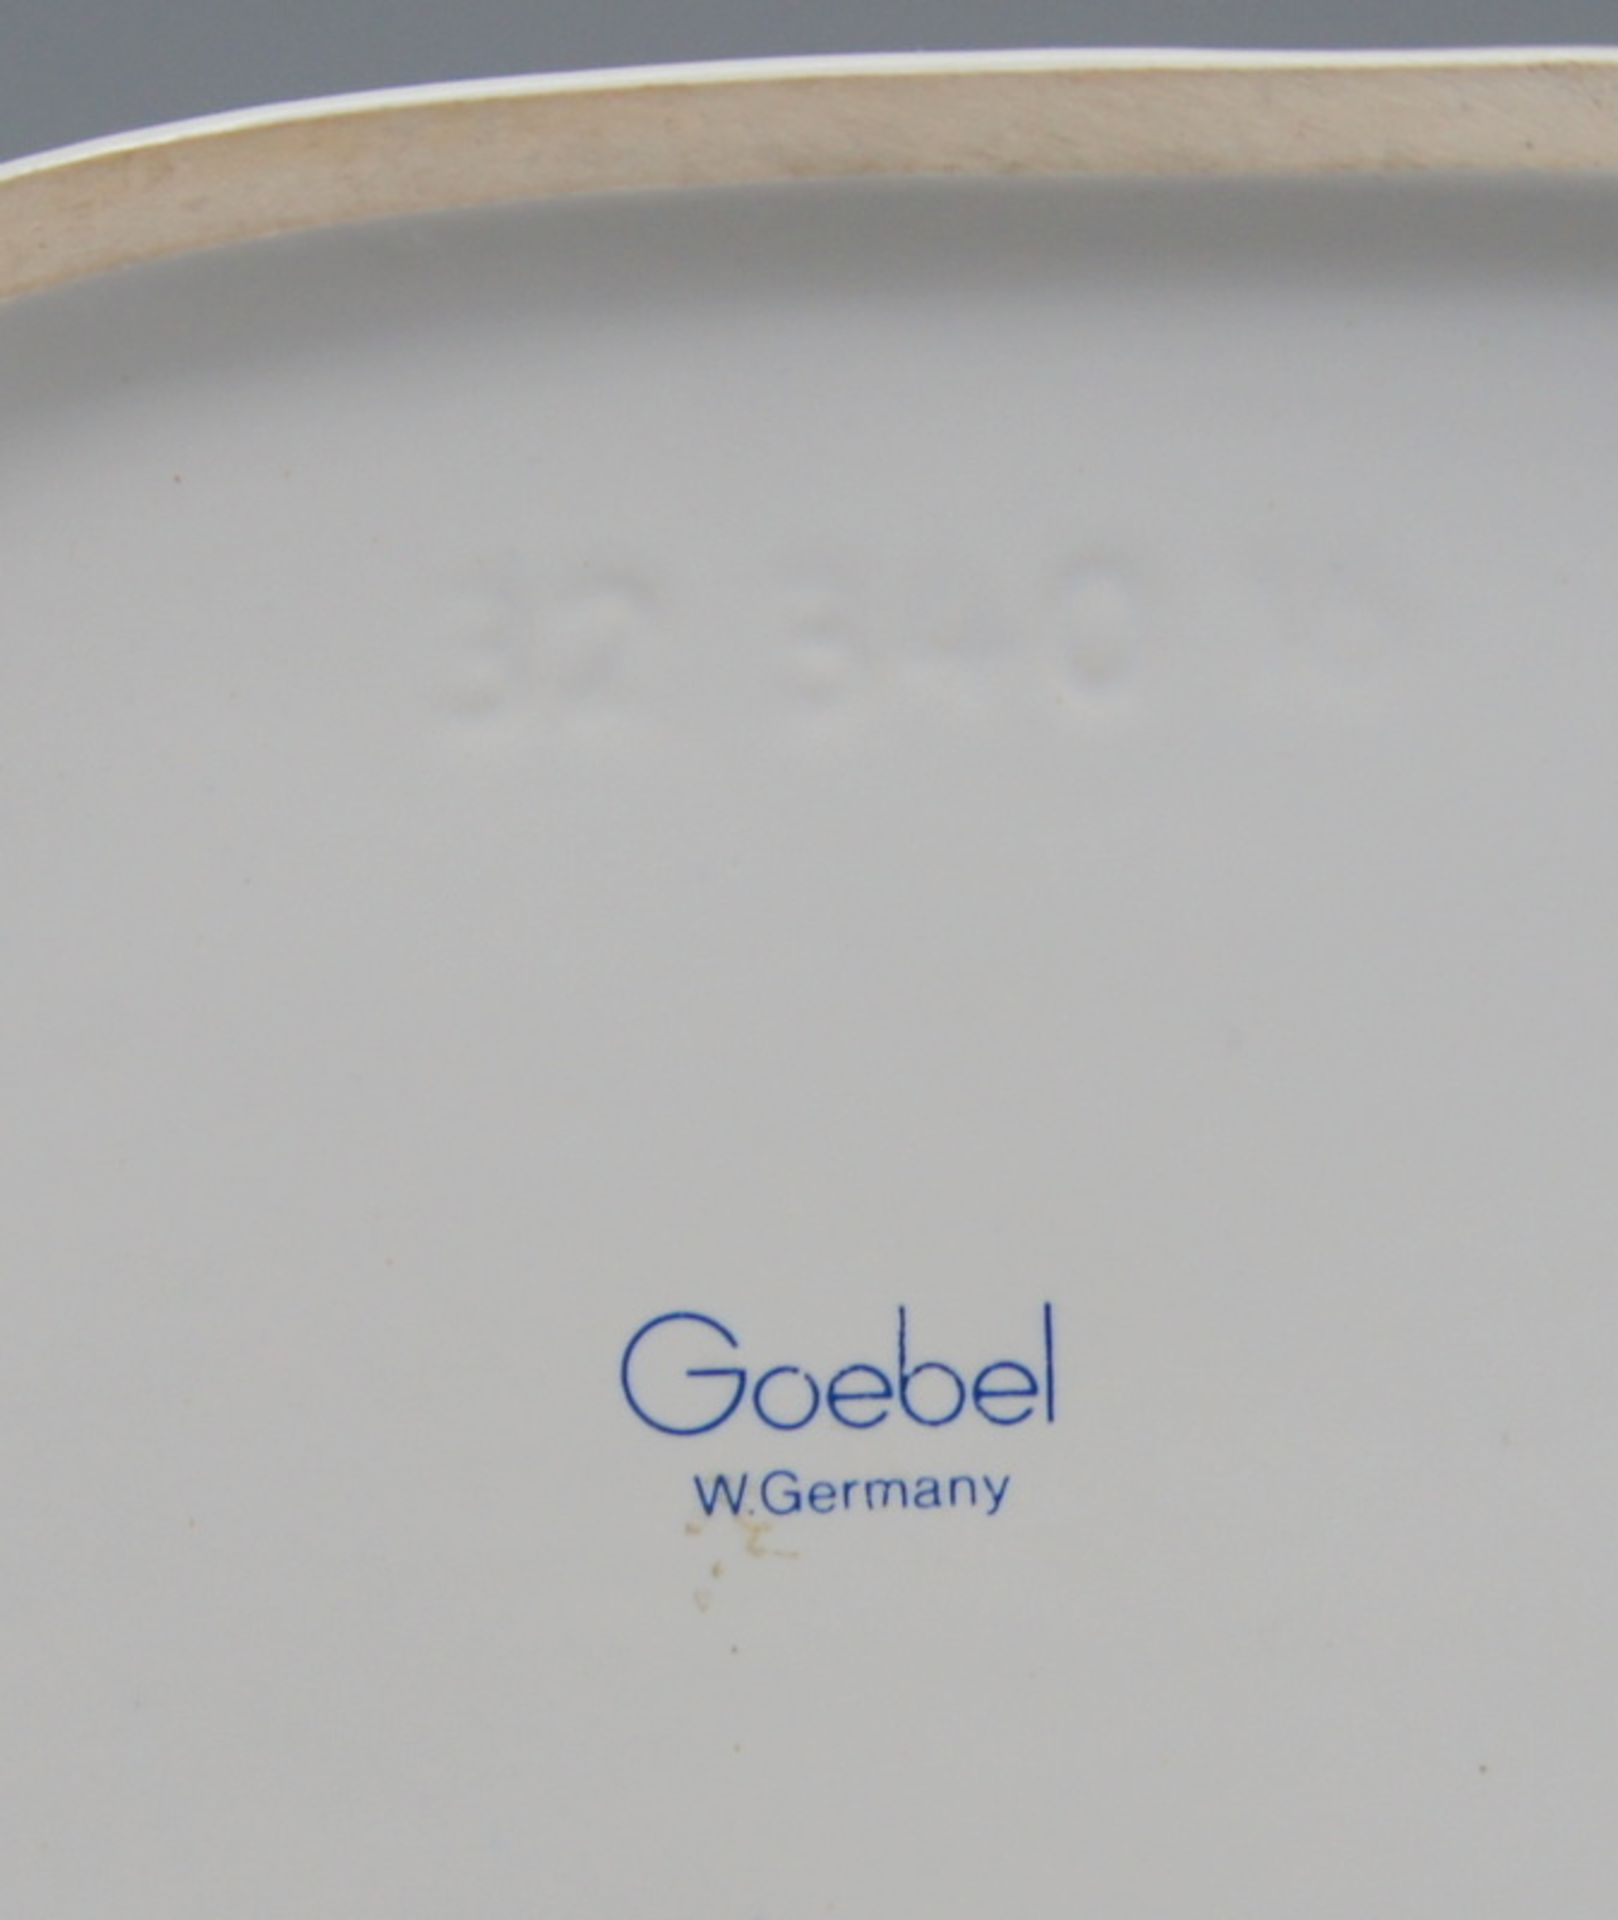 Goebel, Trabendes KaltblutPorzellan, am Boden mit blauer "Goebel Germany" Marke. Weiß - Image 3 of 3